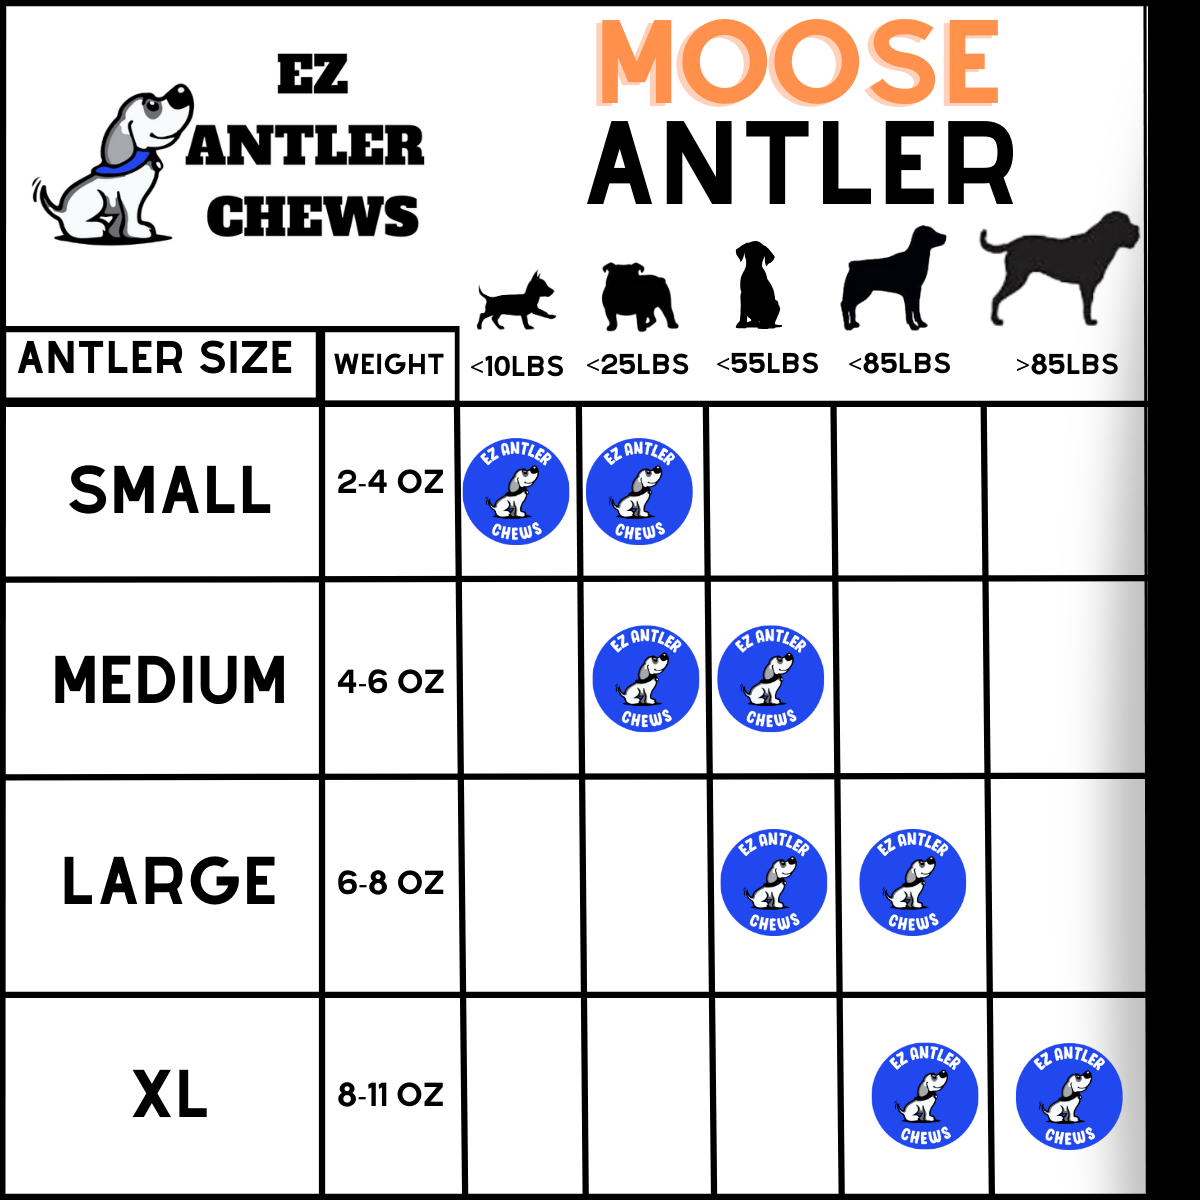 (WHS) Medium Moose Antler Chew